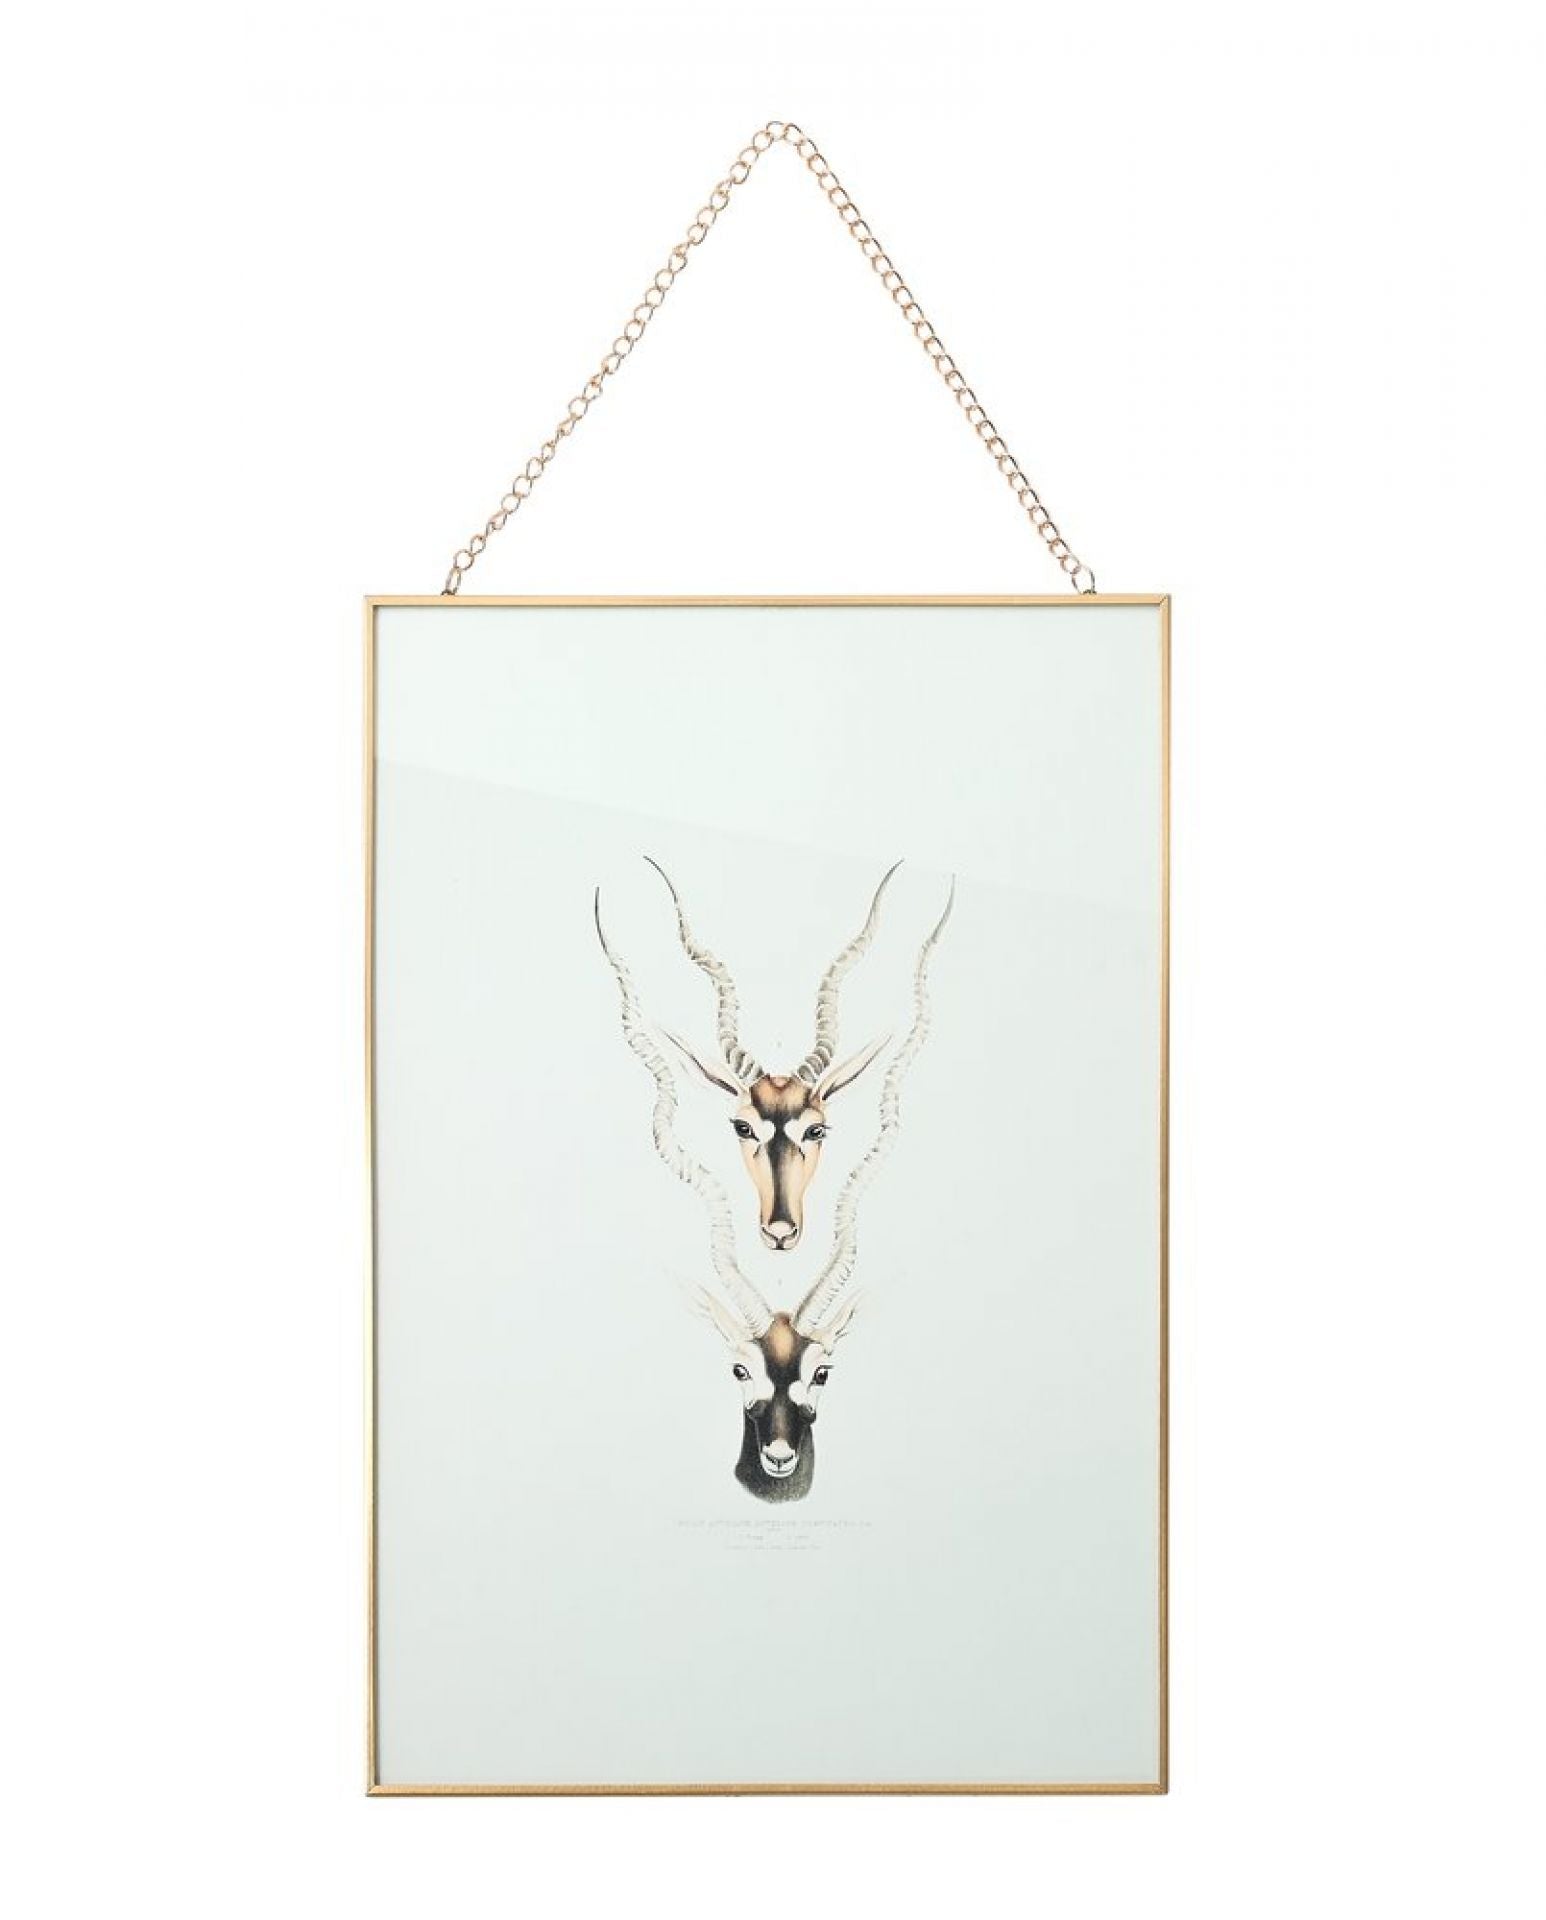 Glasbild Antilope weiß 27x39cm Wandbild mit Goldrand